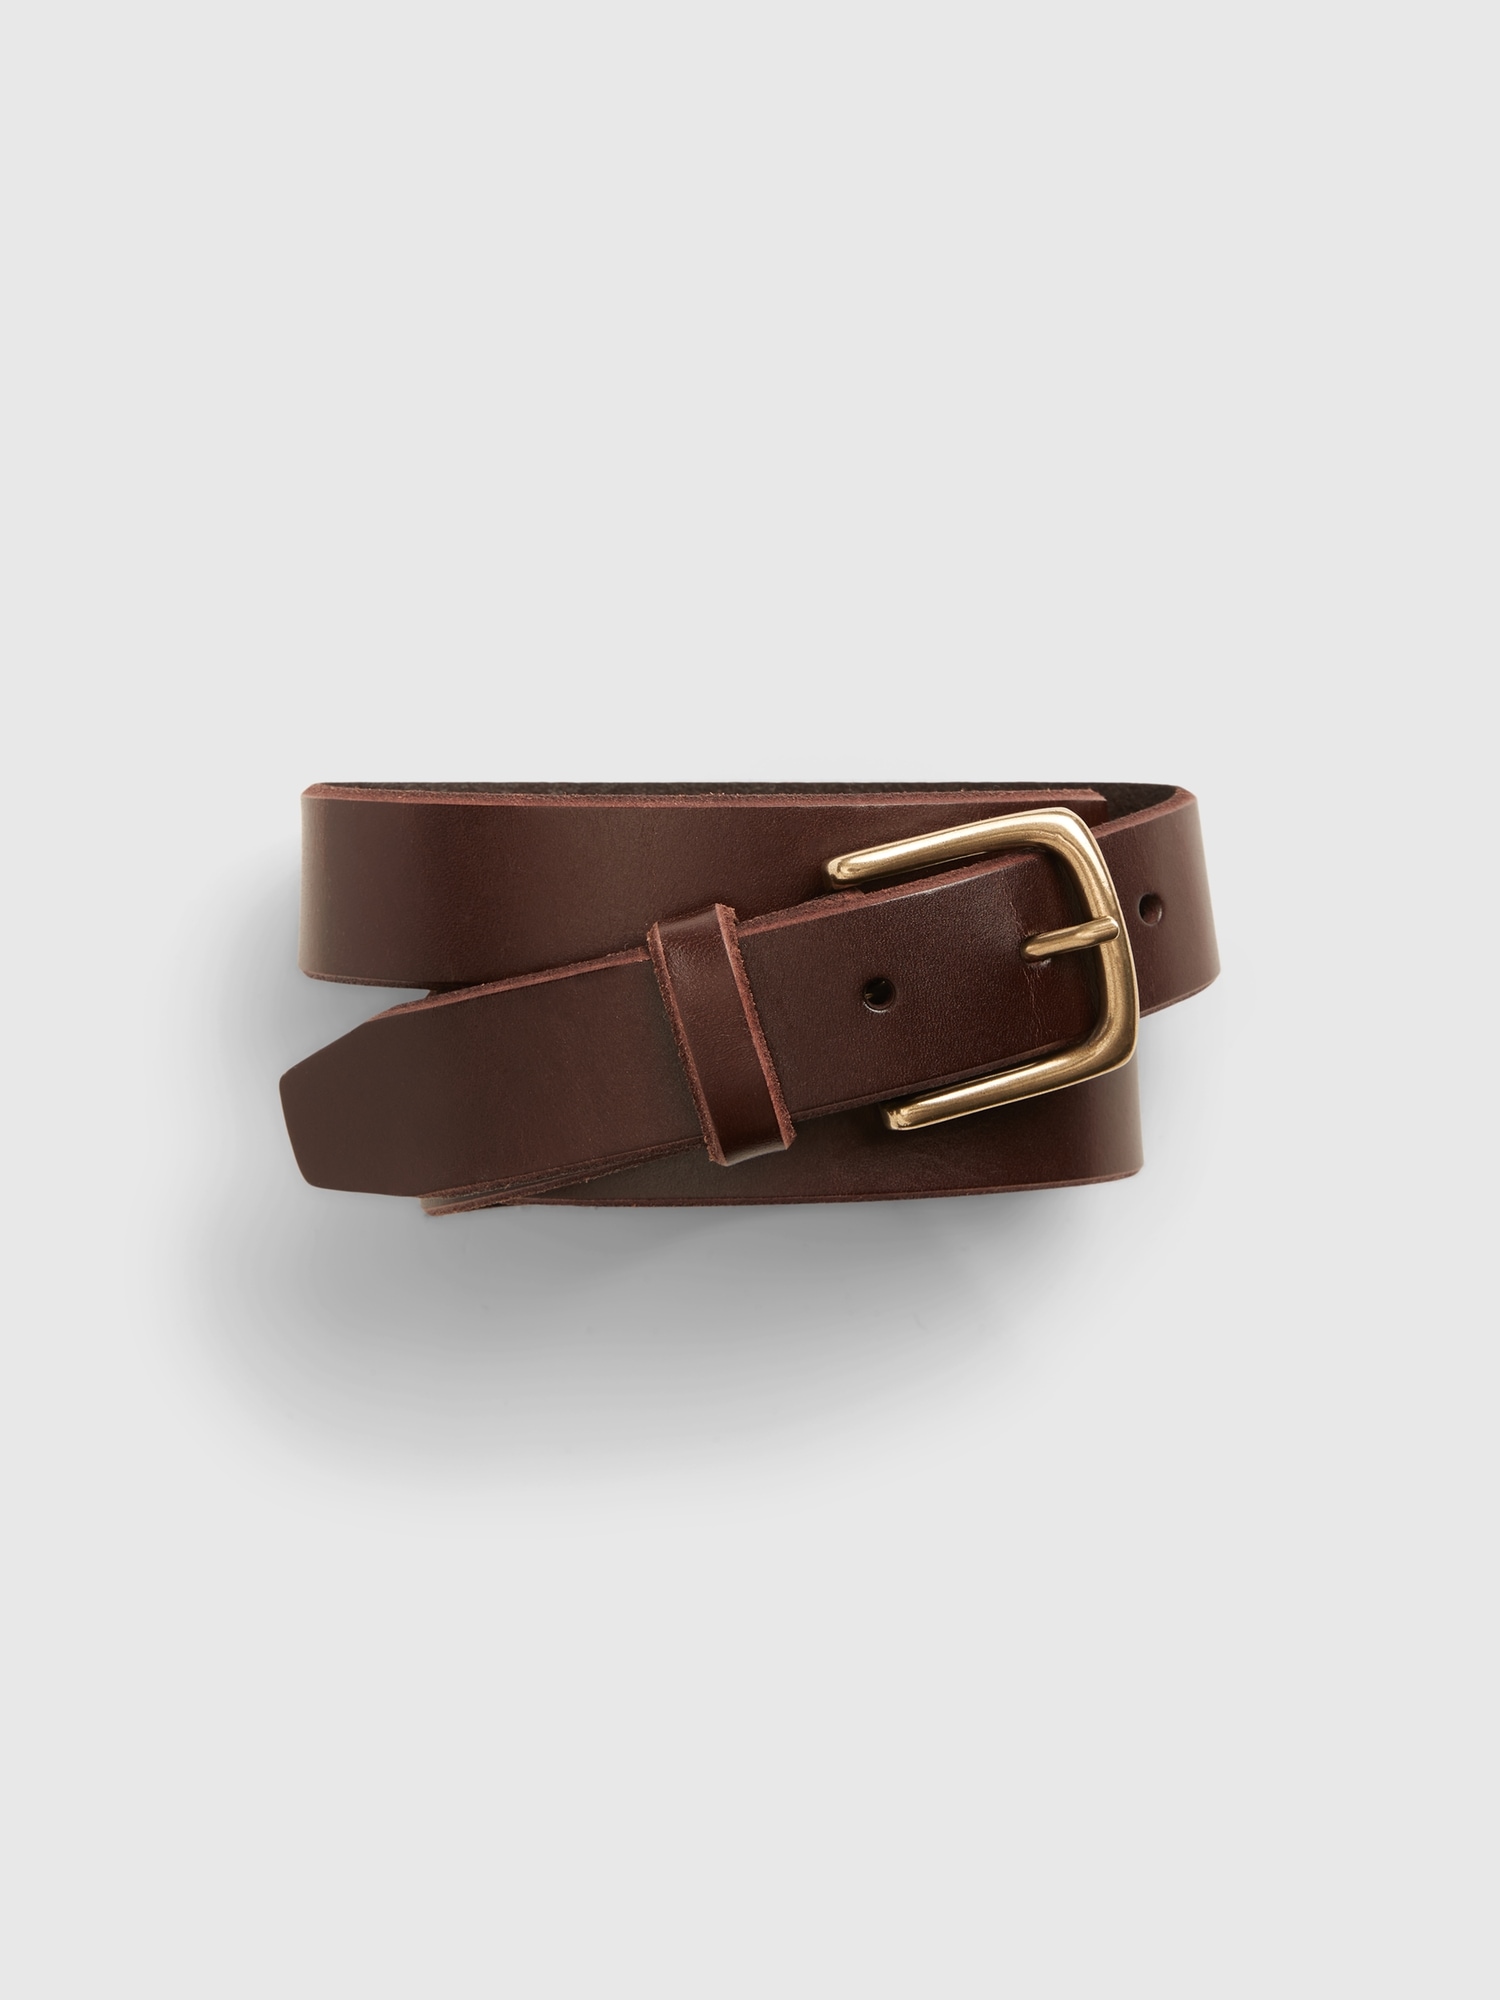 Men's Leather Belt by Gap Brown Size 28W